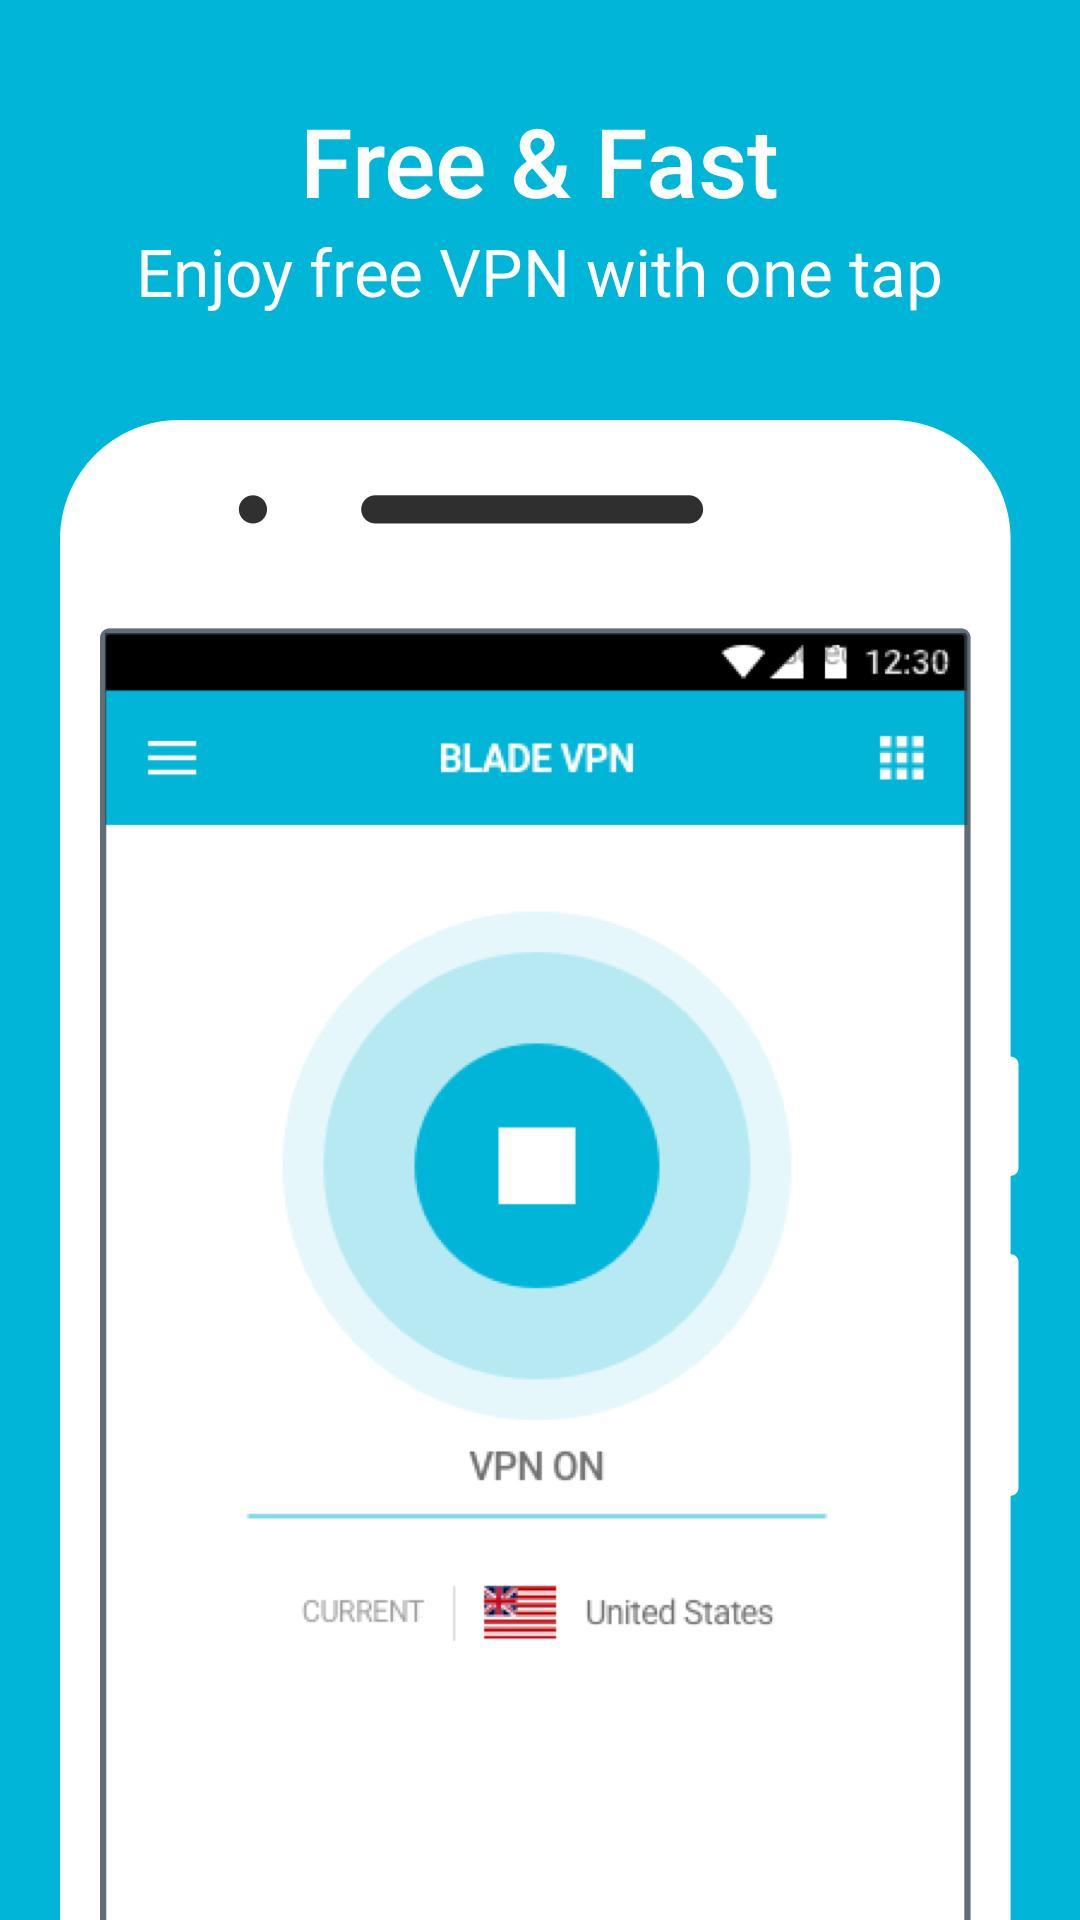 Free VPN Client - Blade VPN APK for Android Download